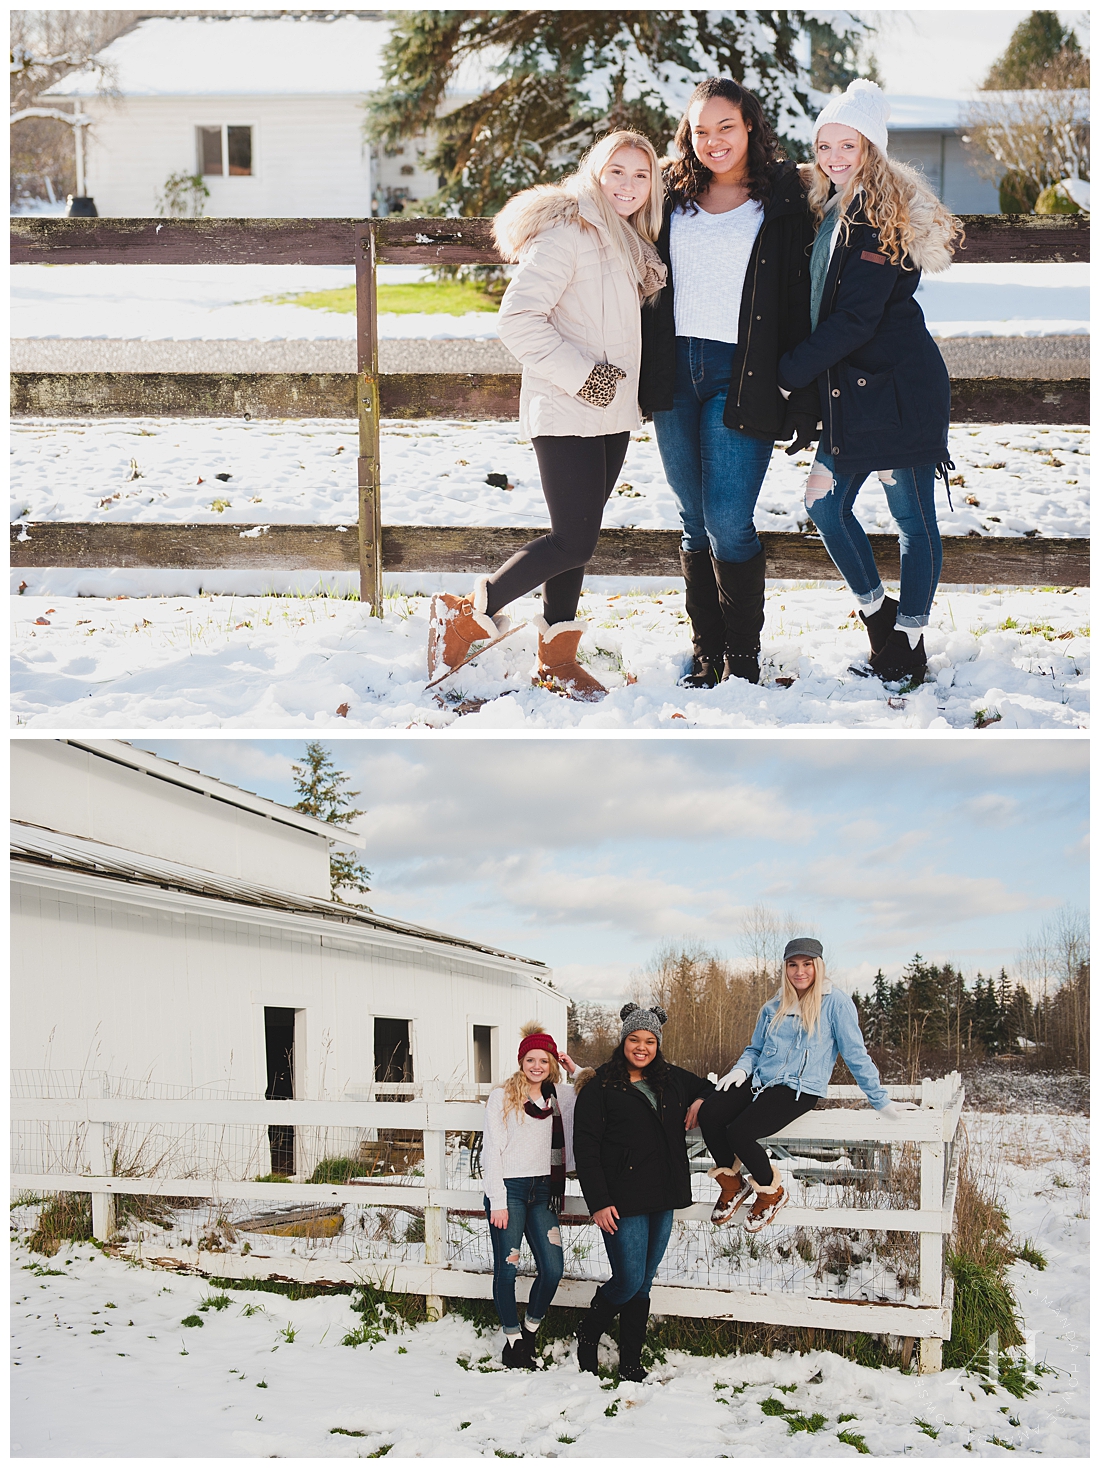 Farm Senior Portraits with White Picket Fence and Snow Photographed by Tacoma Senior Photographer Amanda Howse